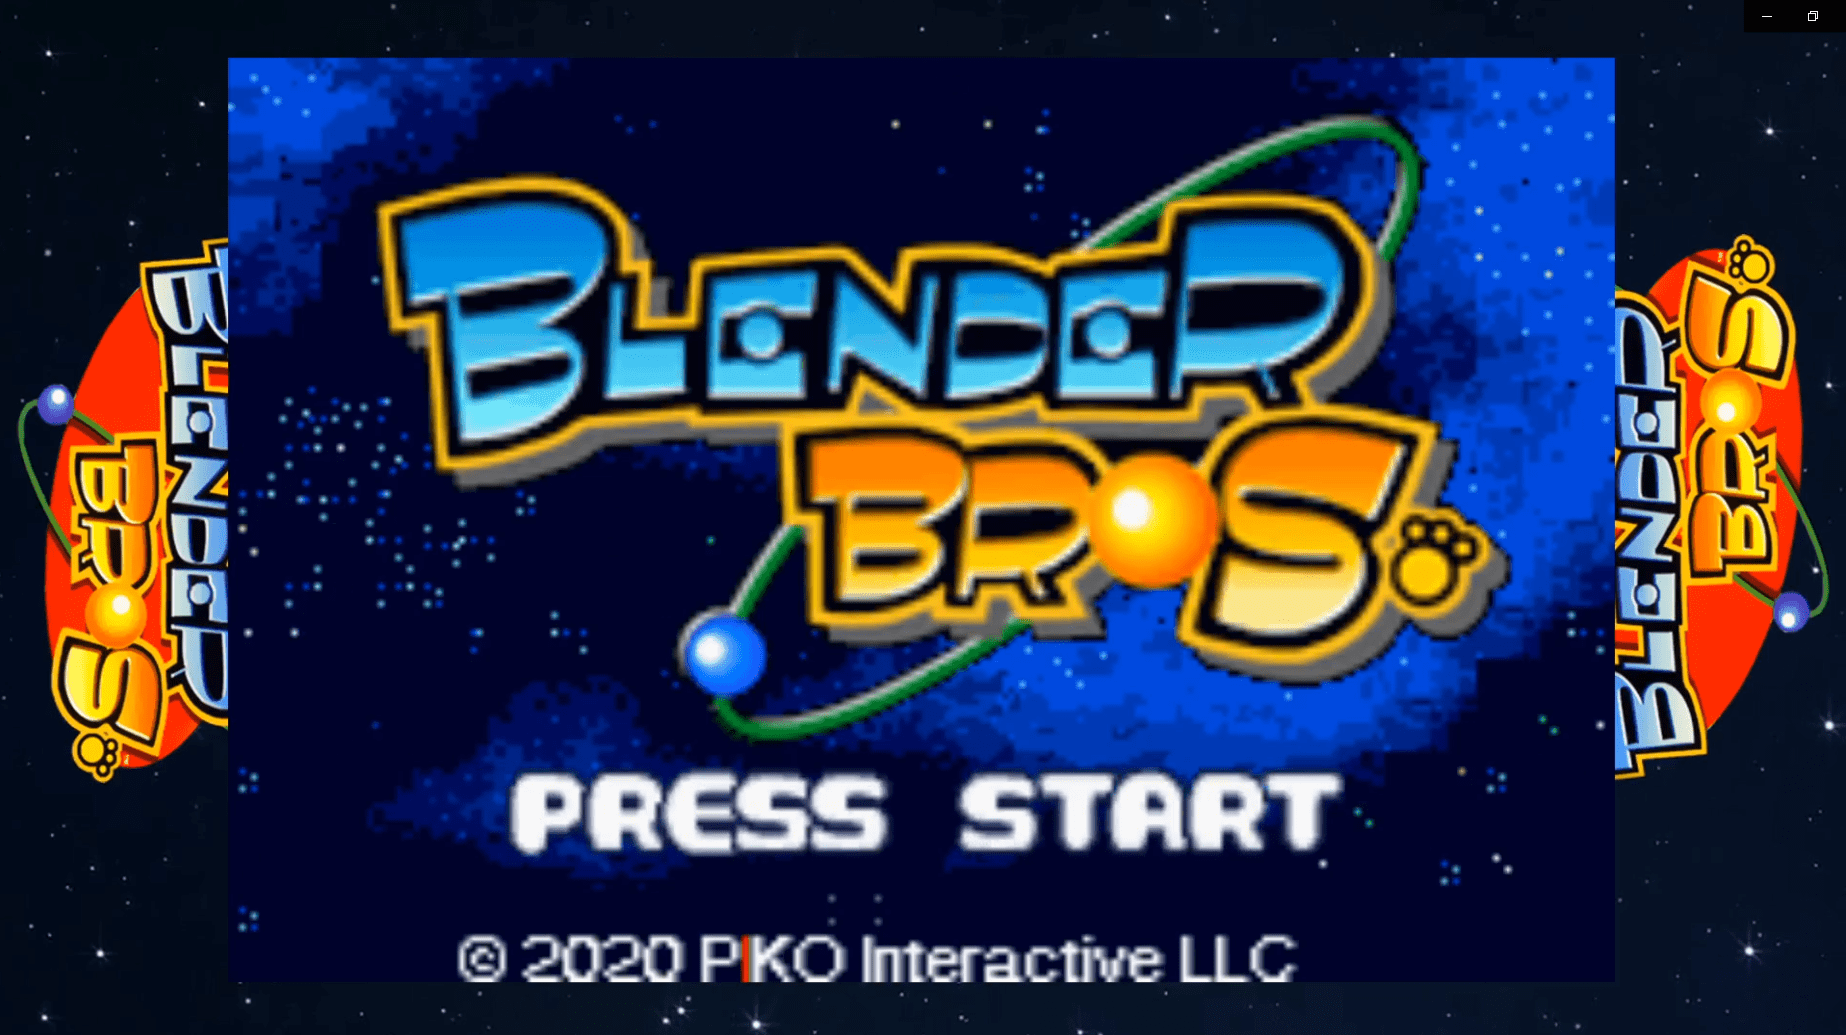 Blender Bros – Steam Review